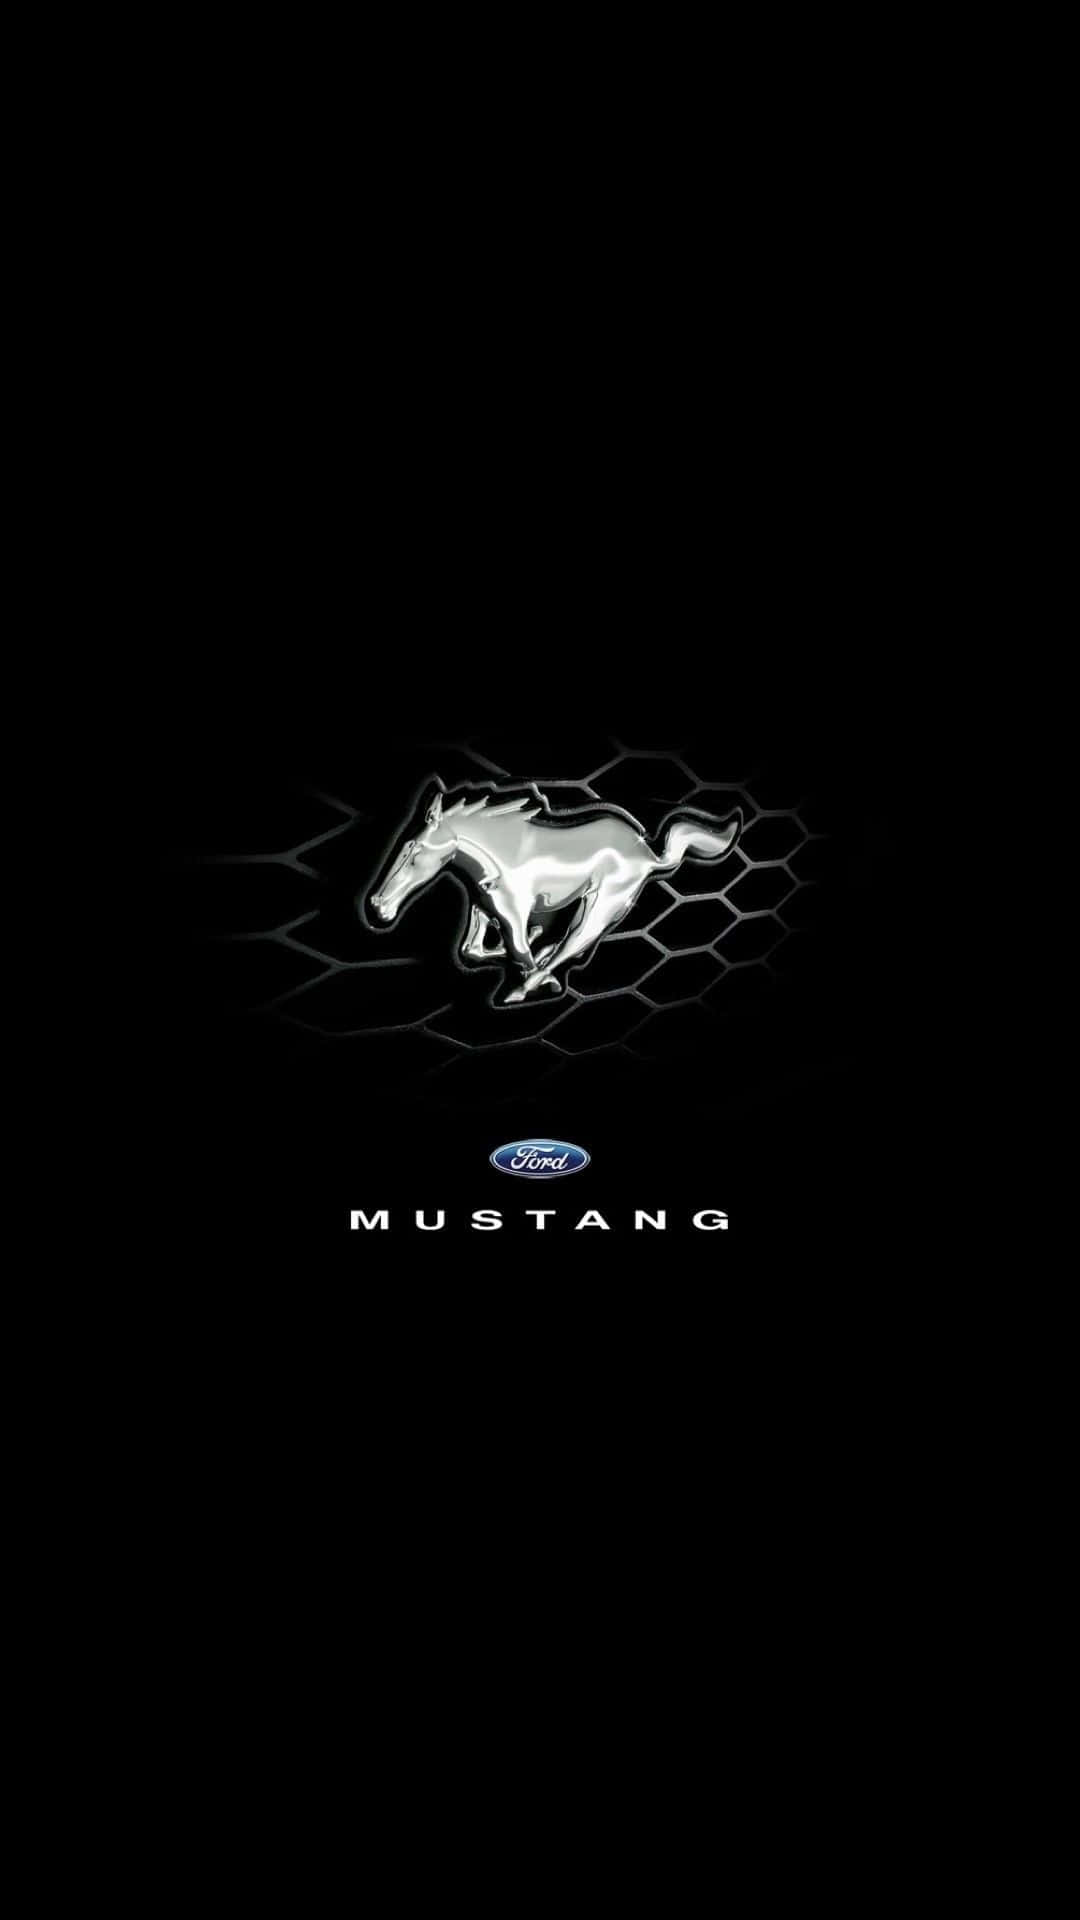 Ford Mustang 1080 X 1920 Wallpaper